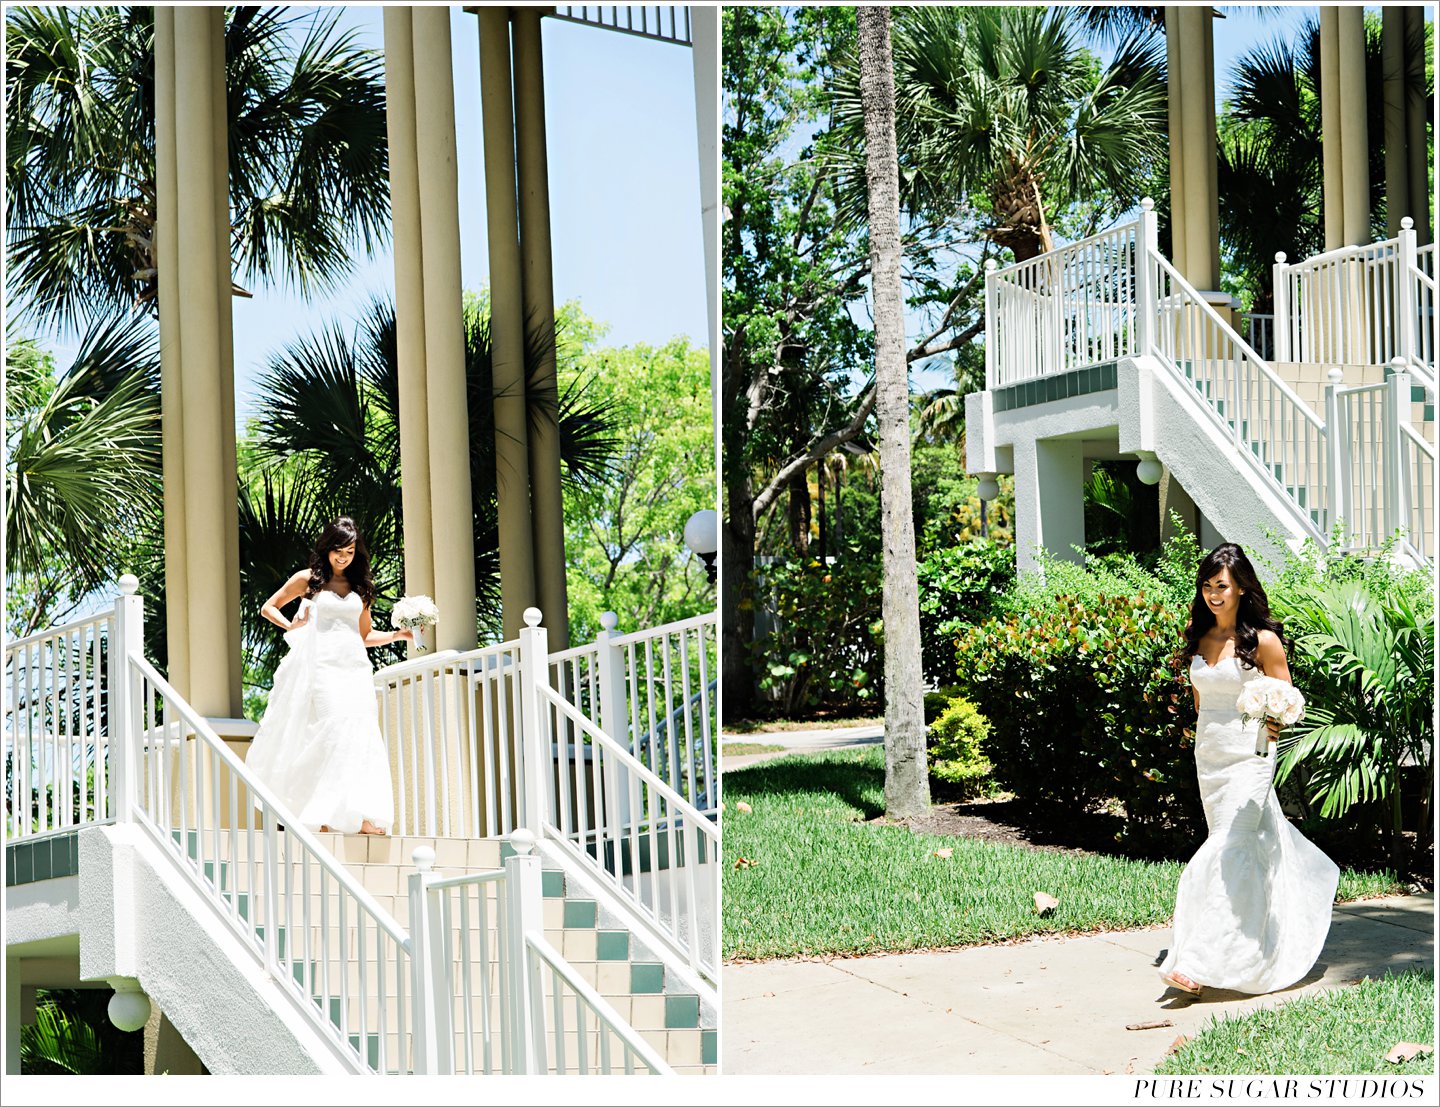 Pure sugar studios_Captiva wedding photography_2296.jpg